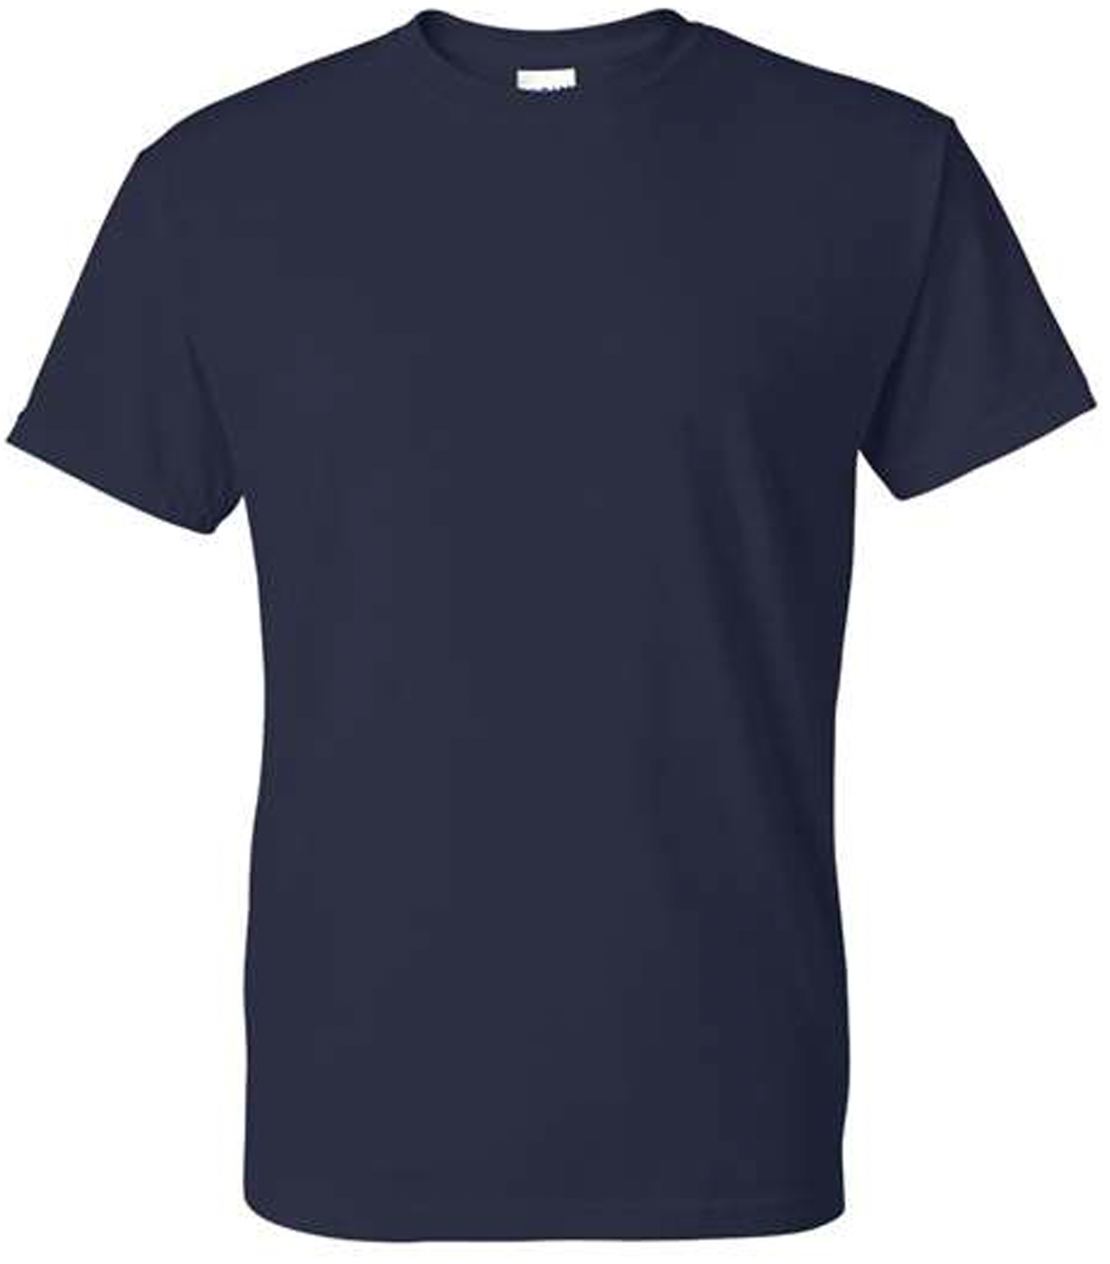 Left Chest Logo - Hopewell Health T-Shirts